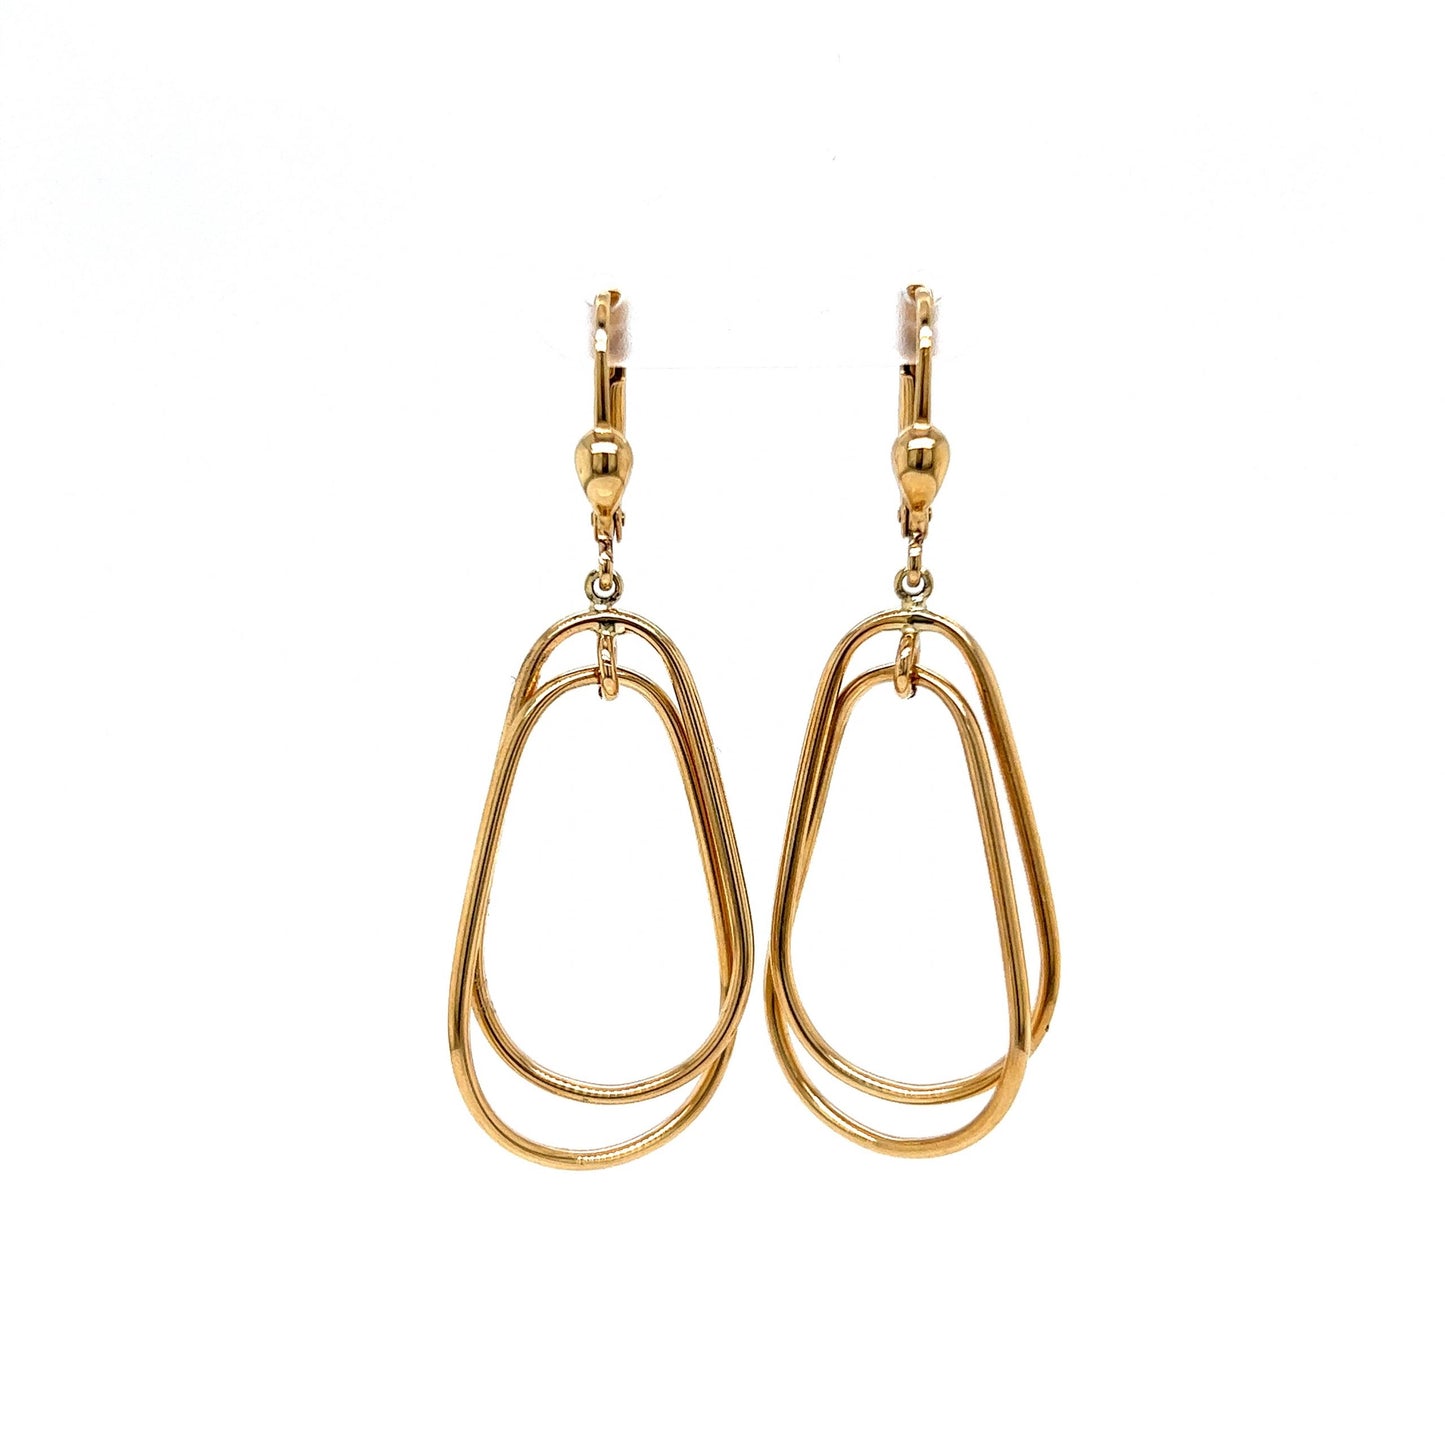 Doubled Up Geometric Drop Earrings in 14k Yellow Gold